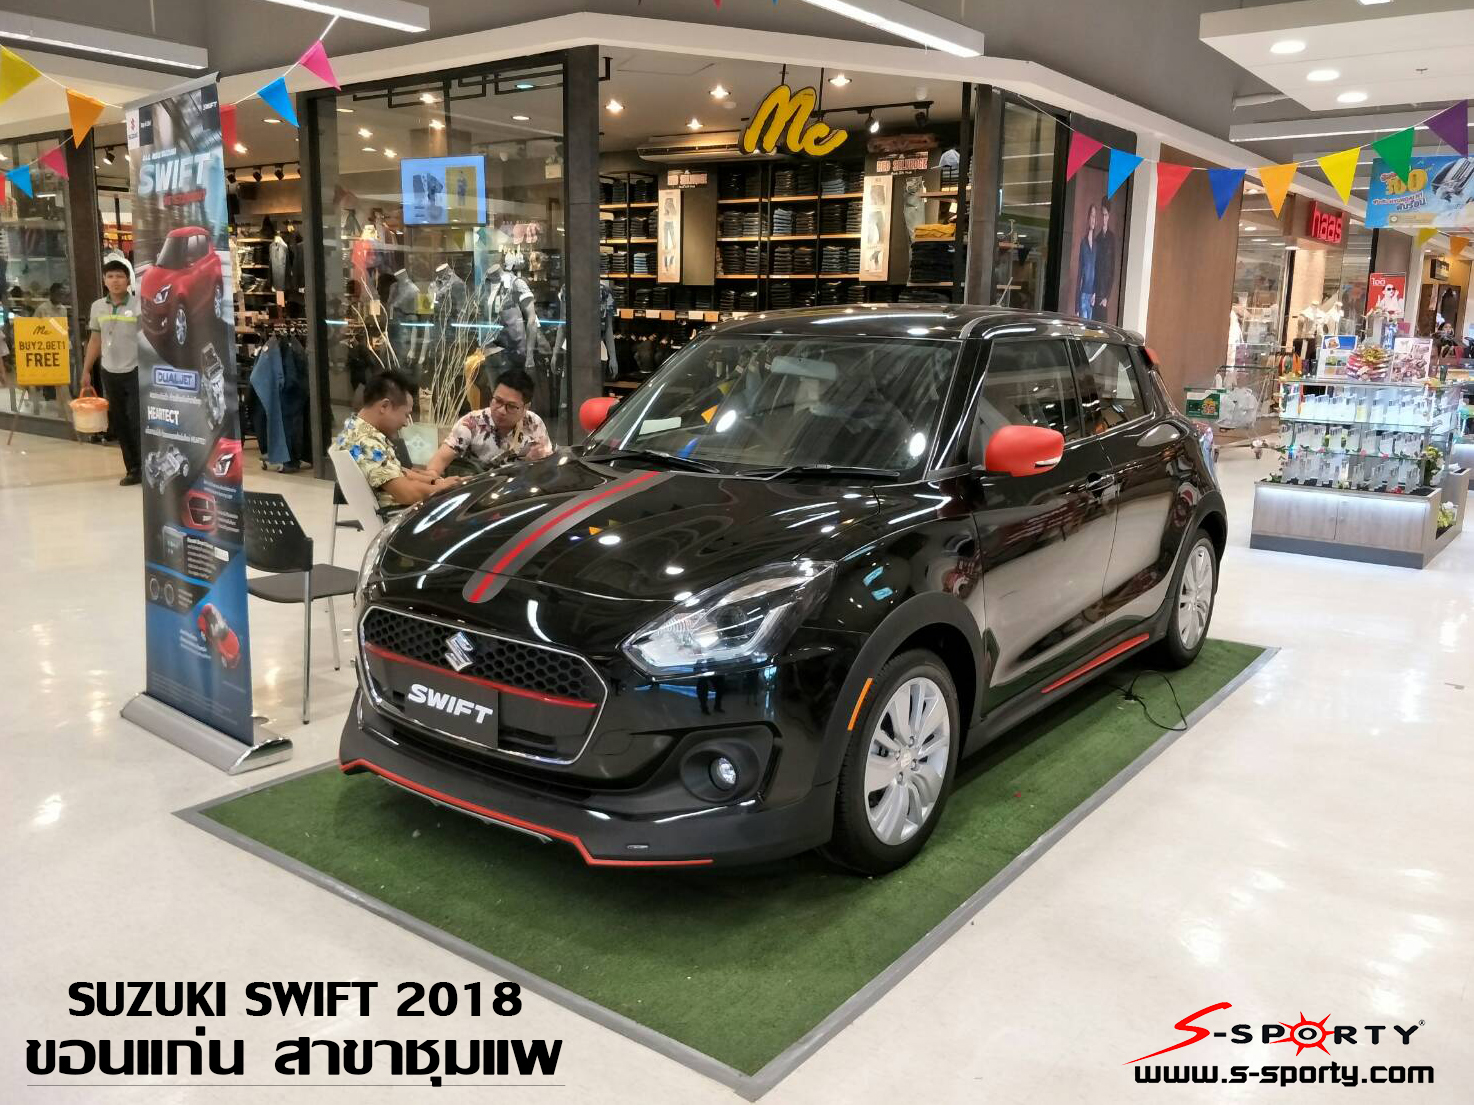 Suzuki Swift 2018 ขอนแก่น สาขาชุมพร